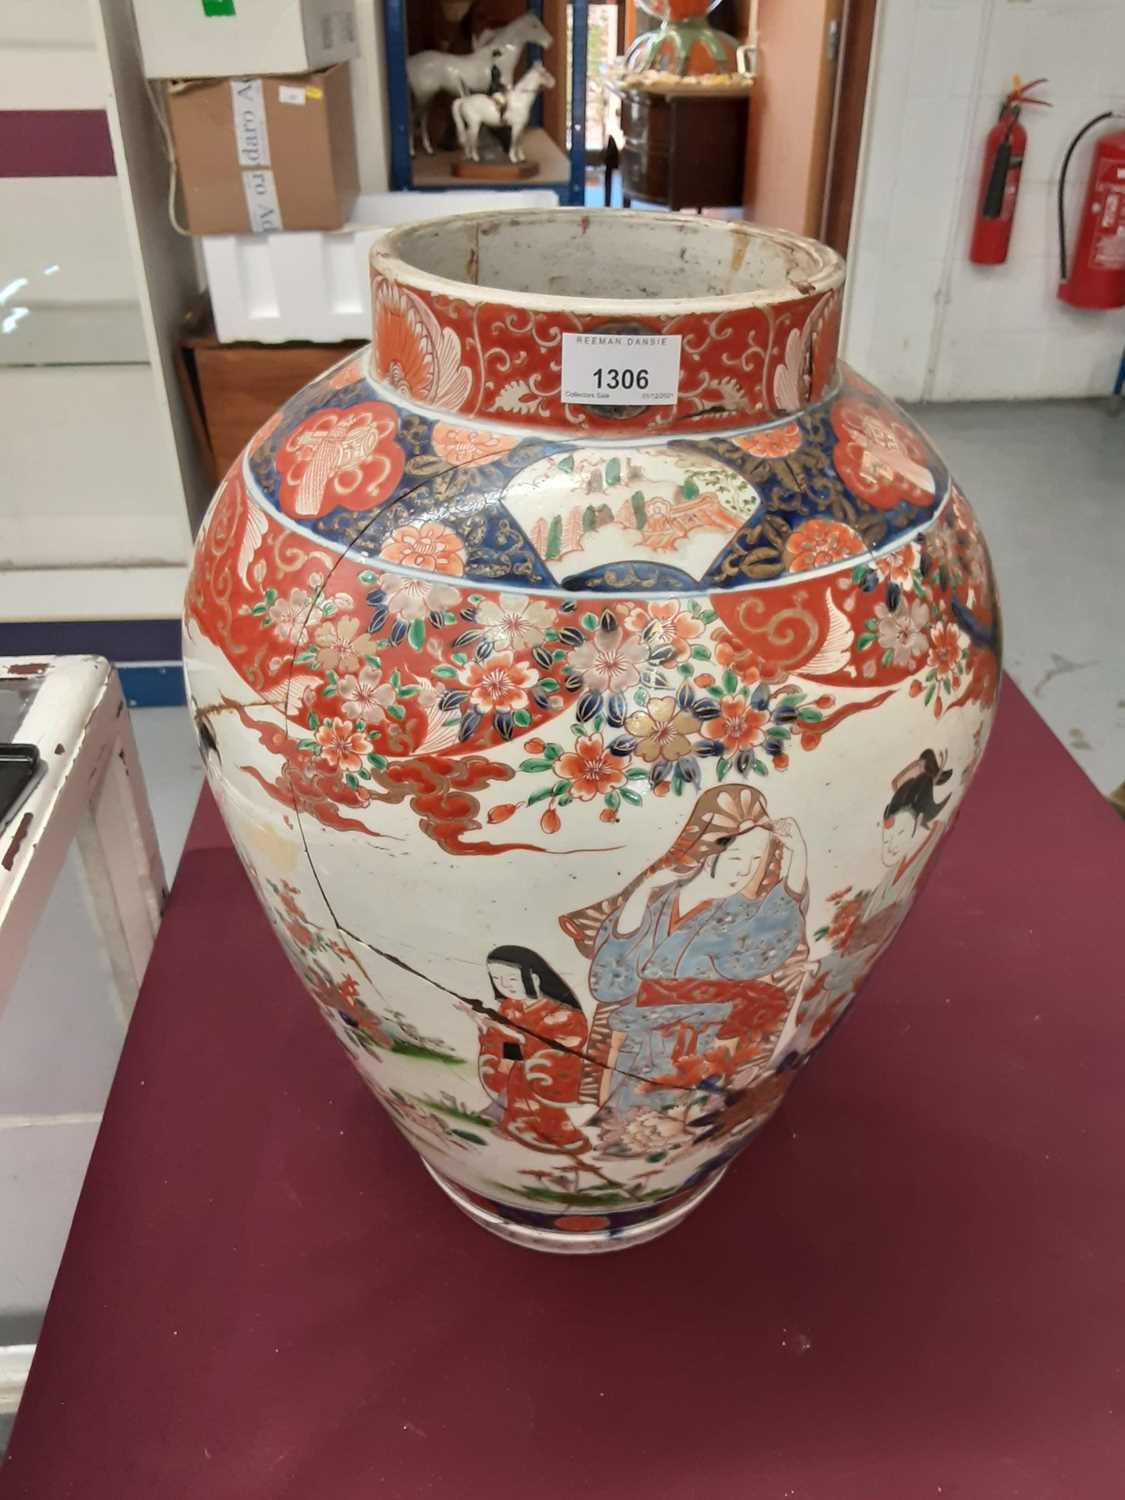 Lot 1306 - Large 19th century Japanese porcelain jar